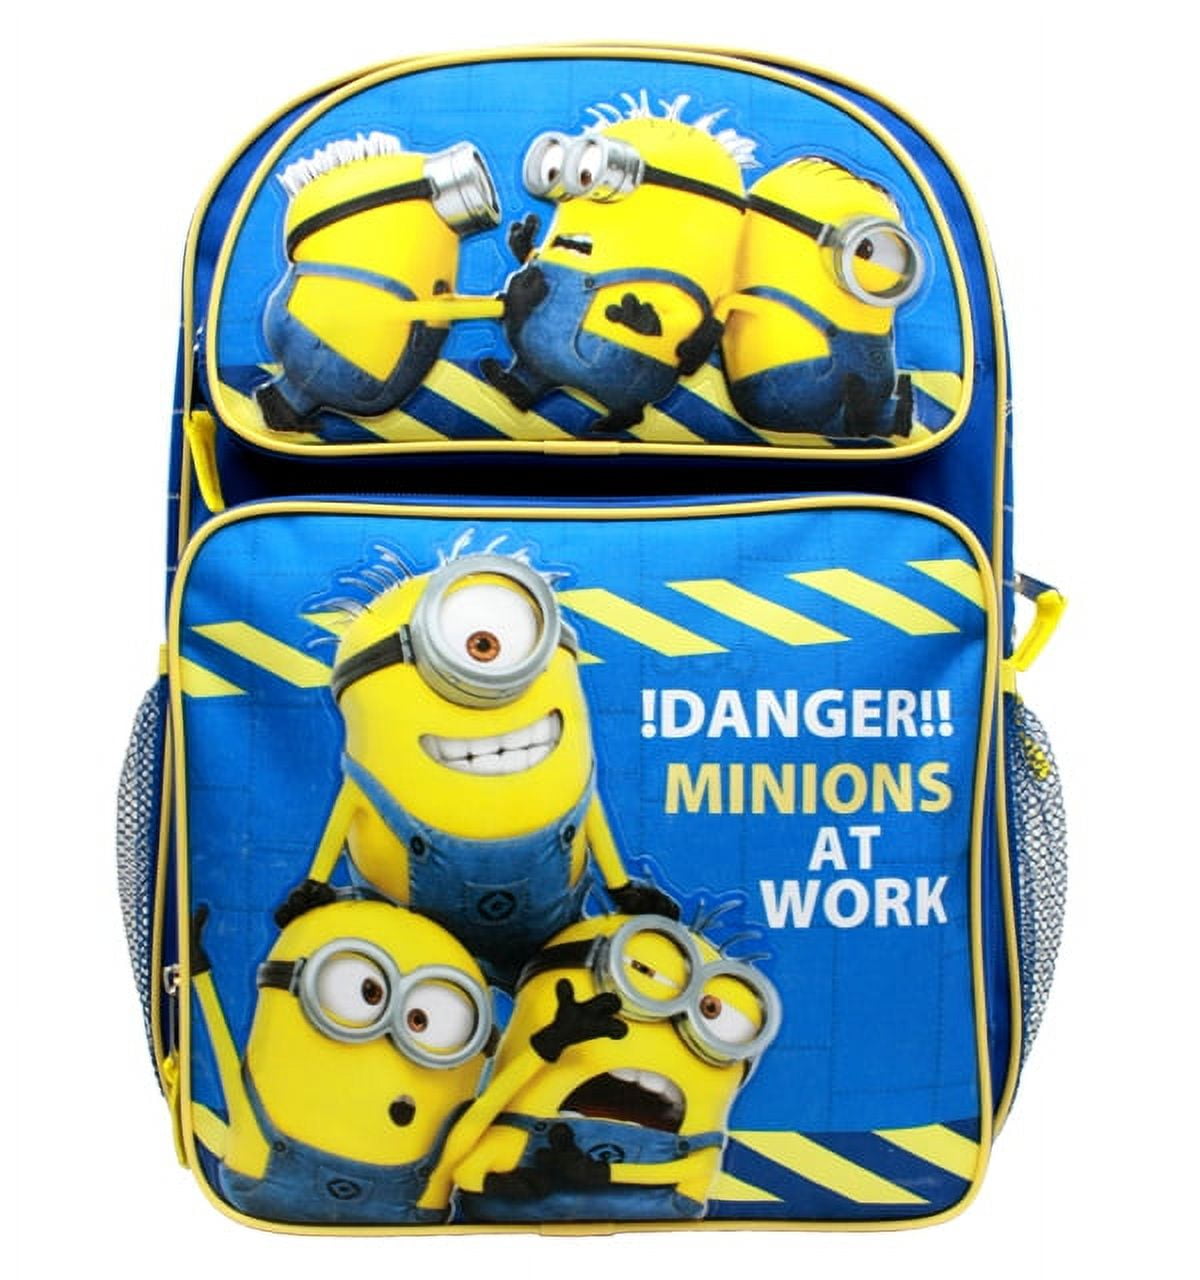 New Minions I Speak Minion Large Blue 16 School Bag/Knapsack/Backpack